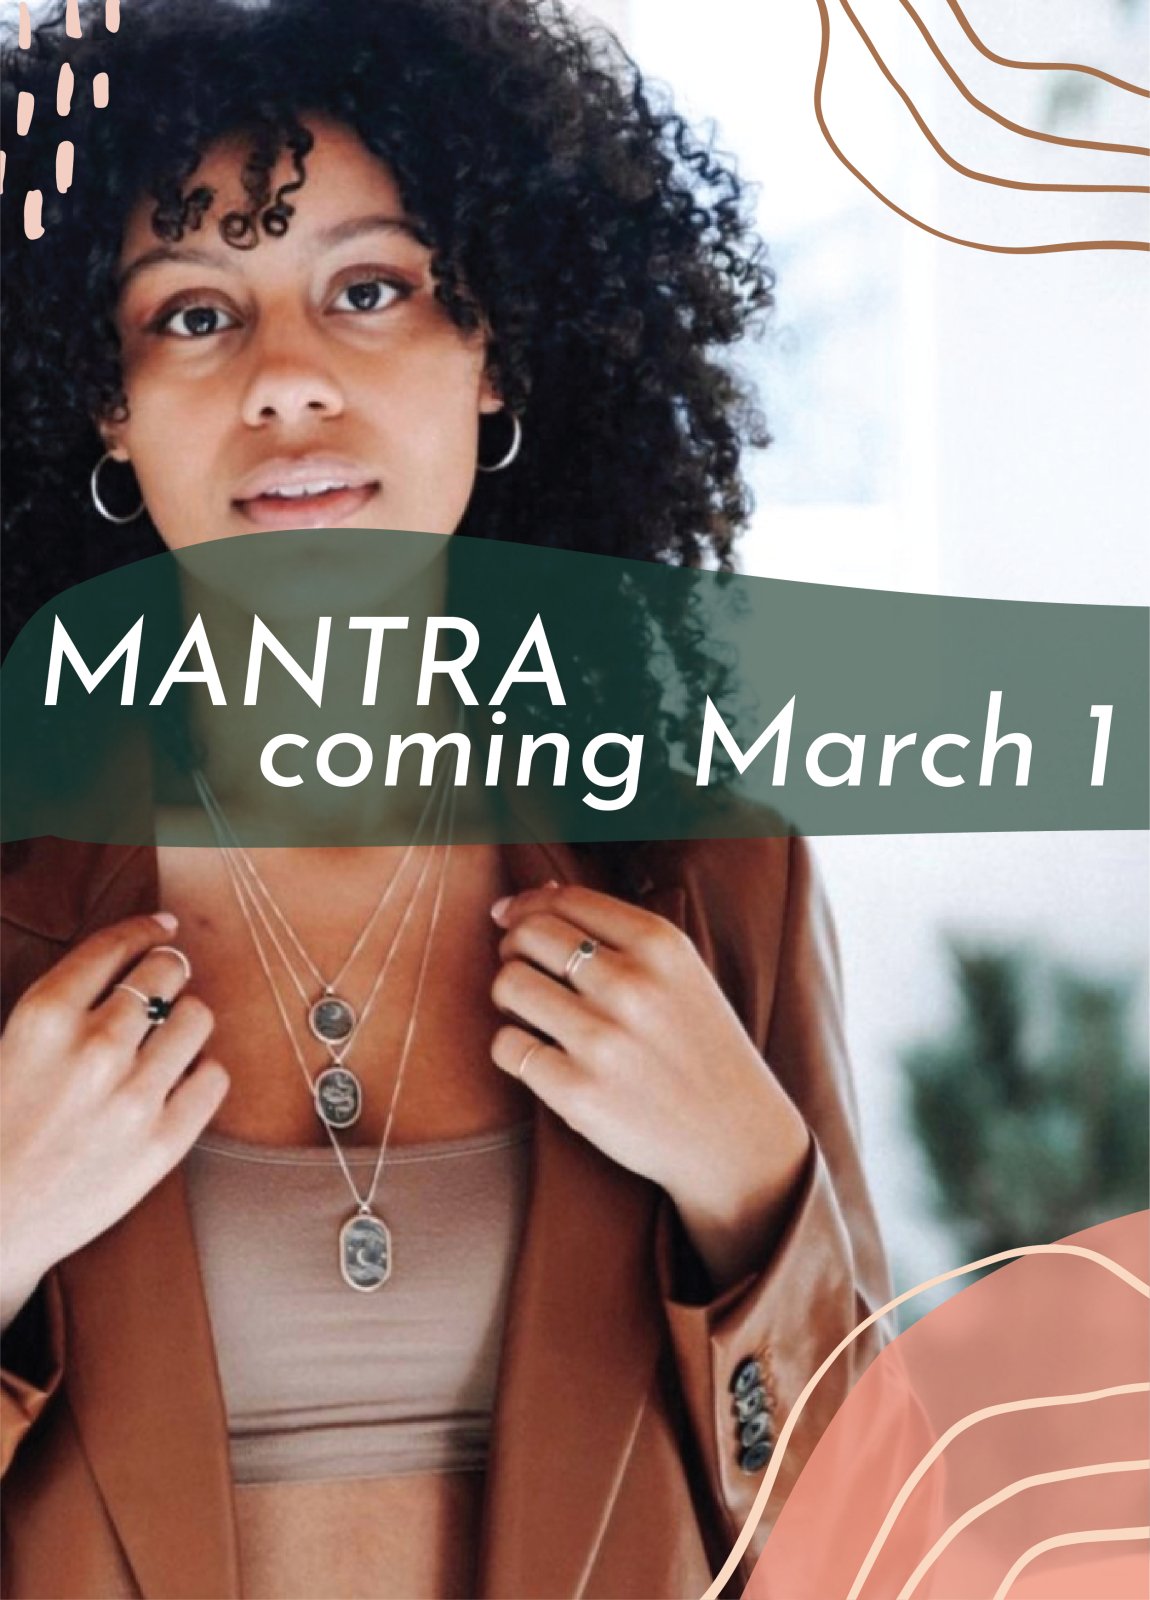 Introducing: Mantra